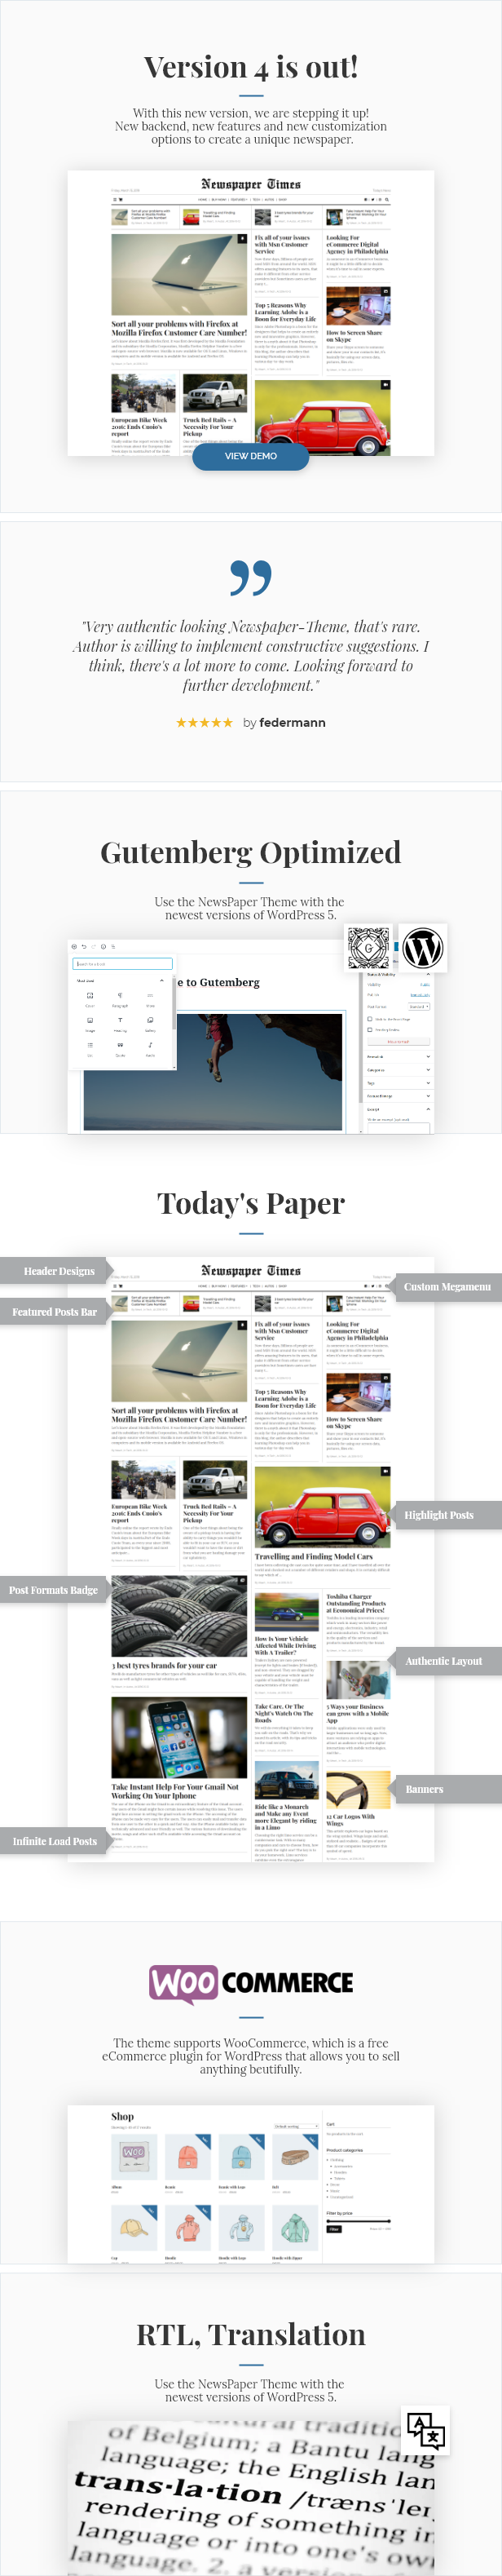 NewsPaper - News & Magazine WordPress Theme - 1